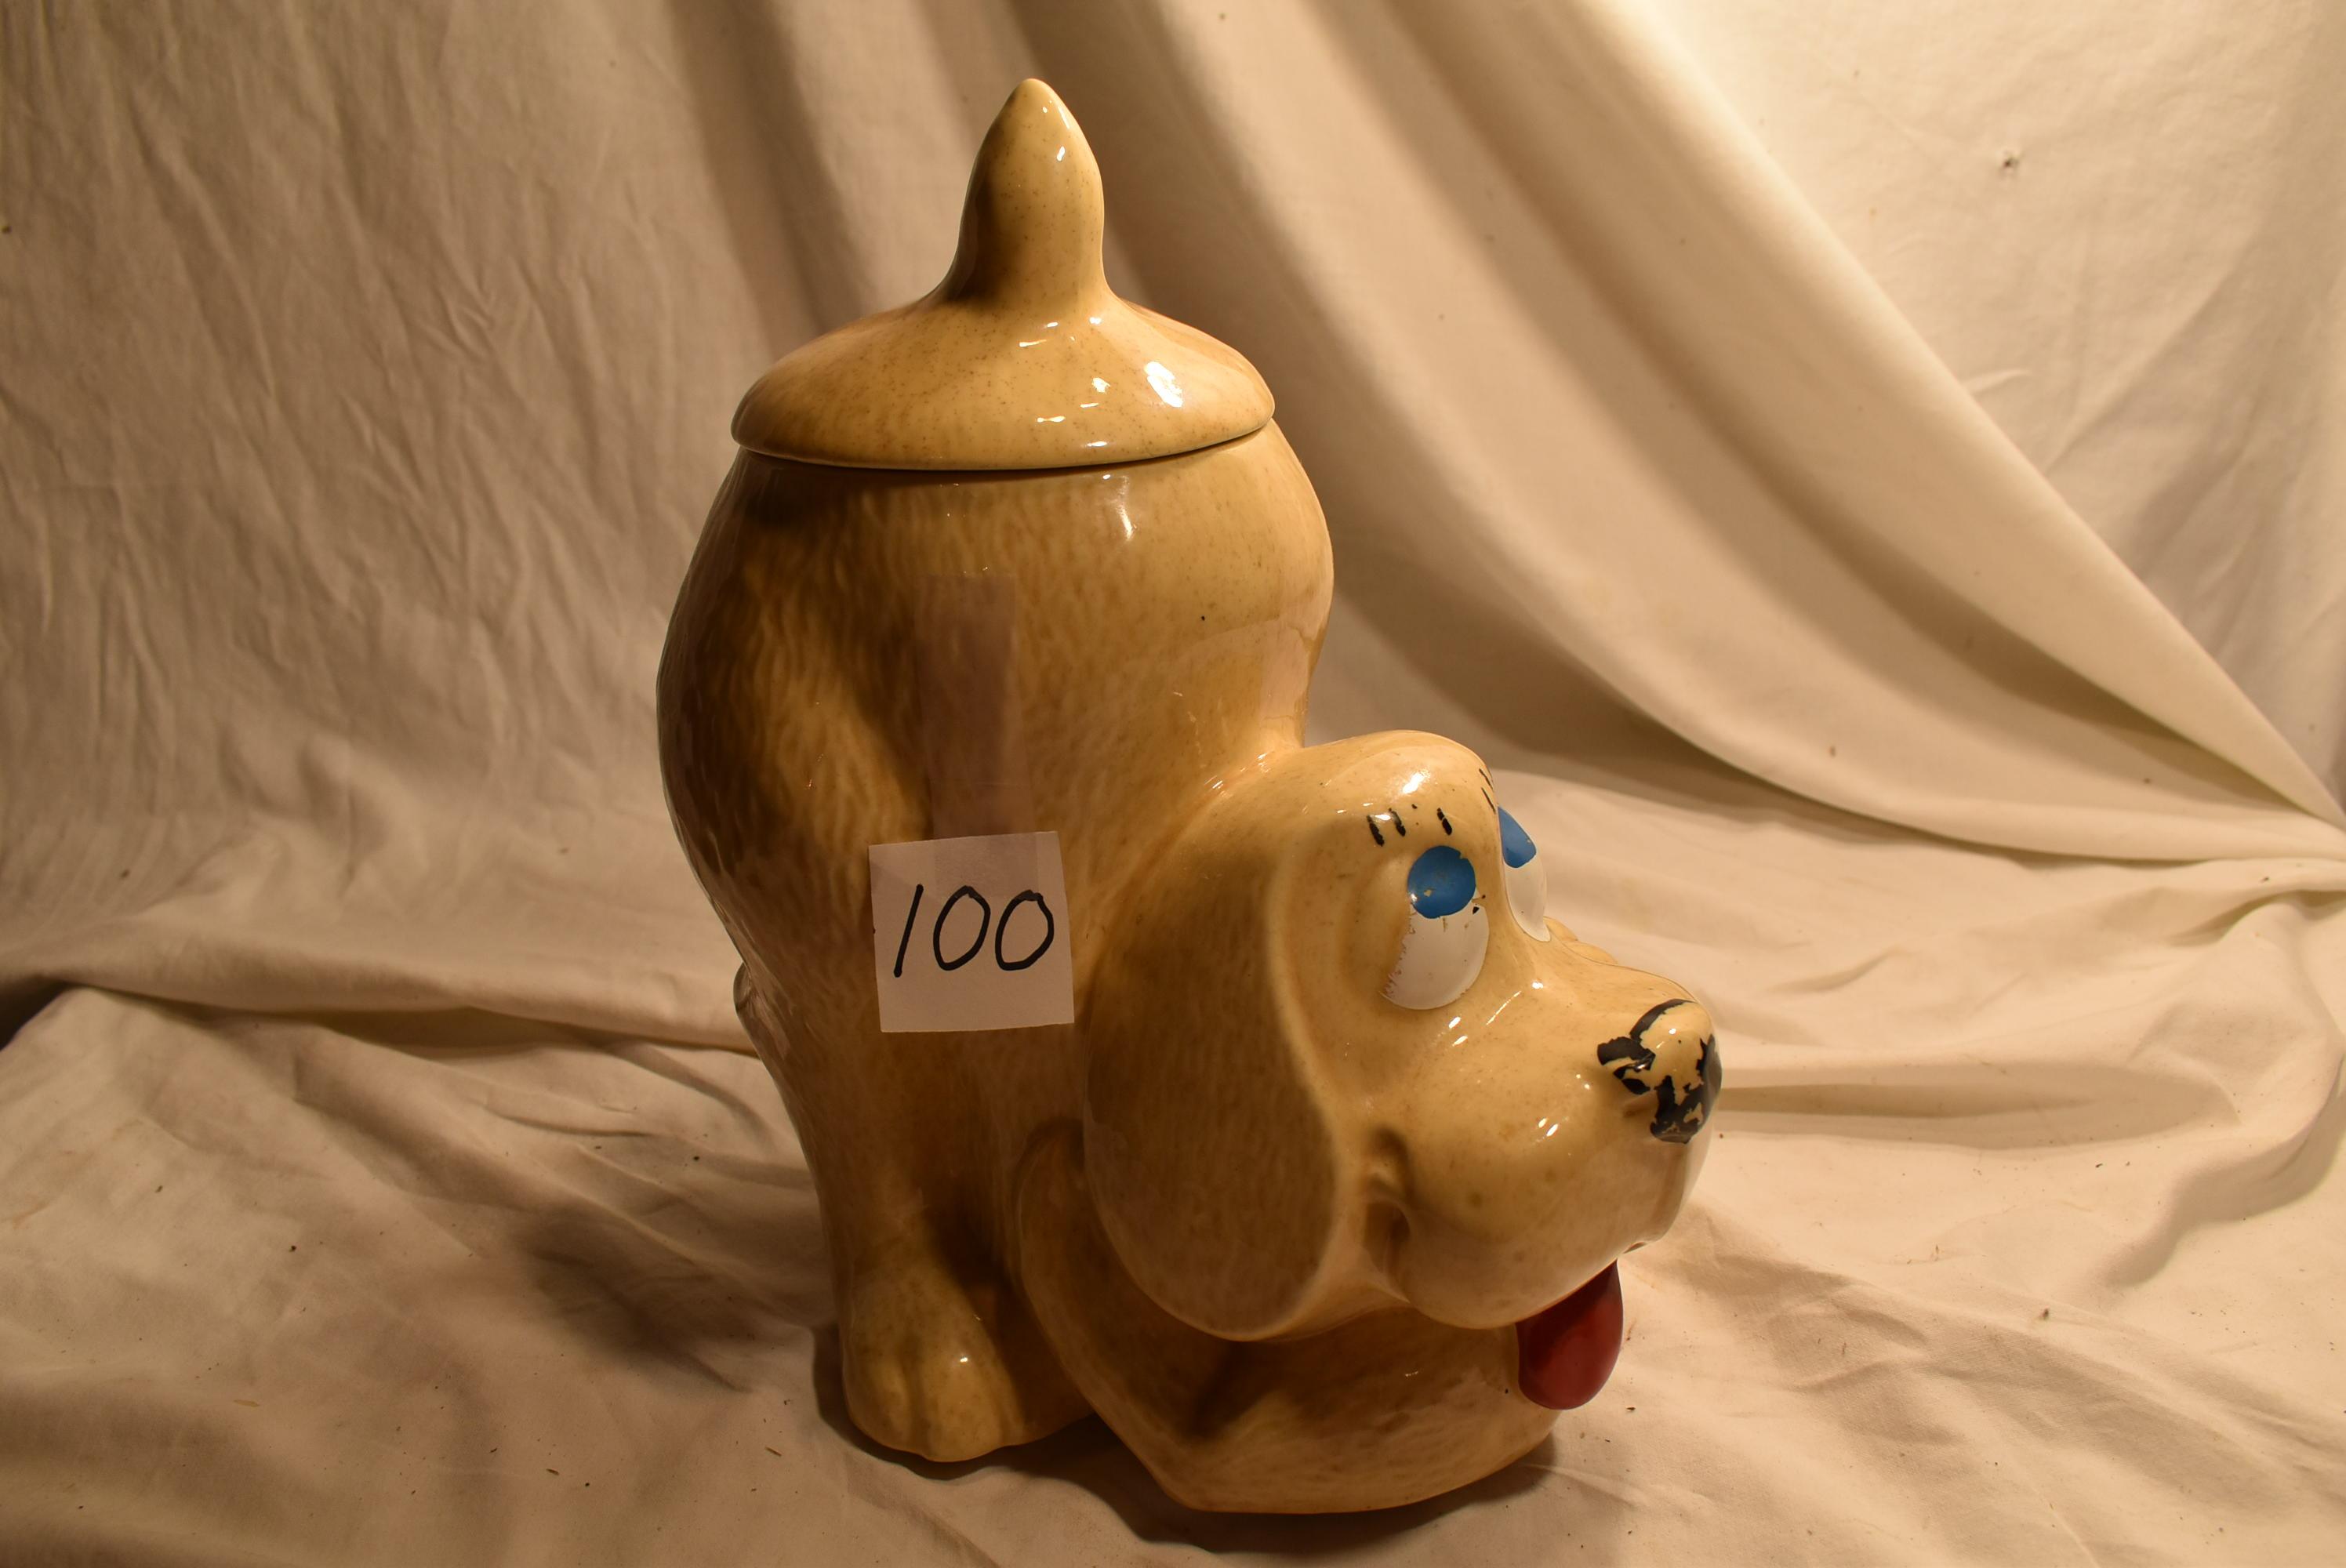 Usa (McCoy) 272, Dog Cookie Jar, 11"h, No Visible Damage.